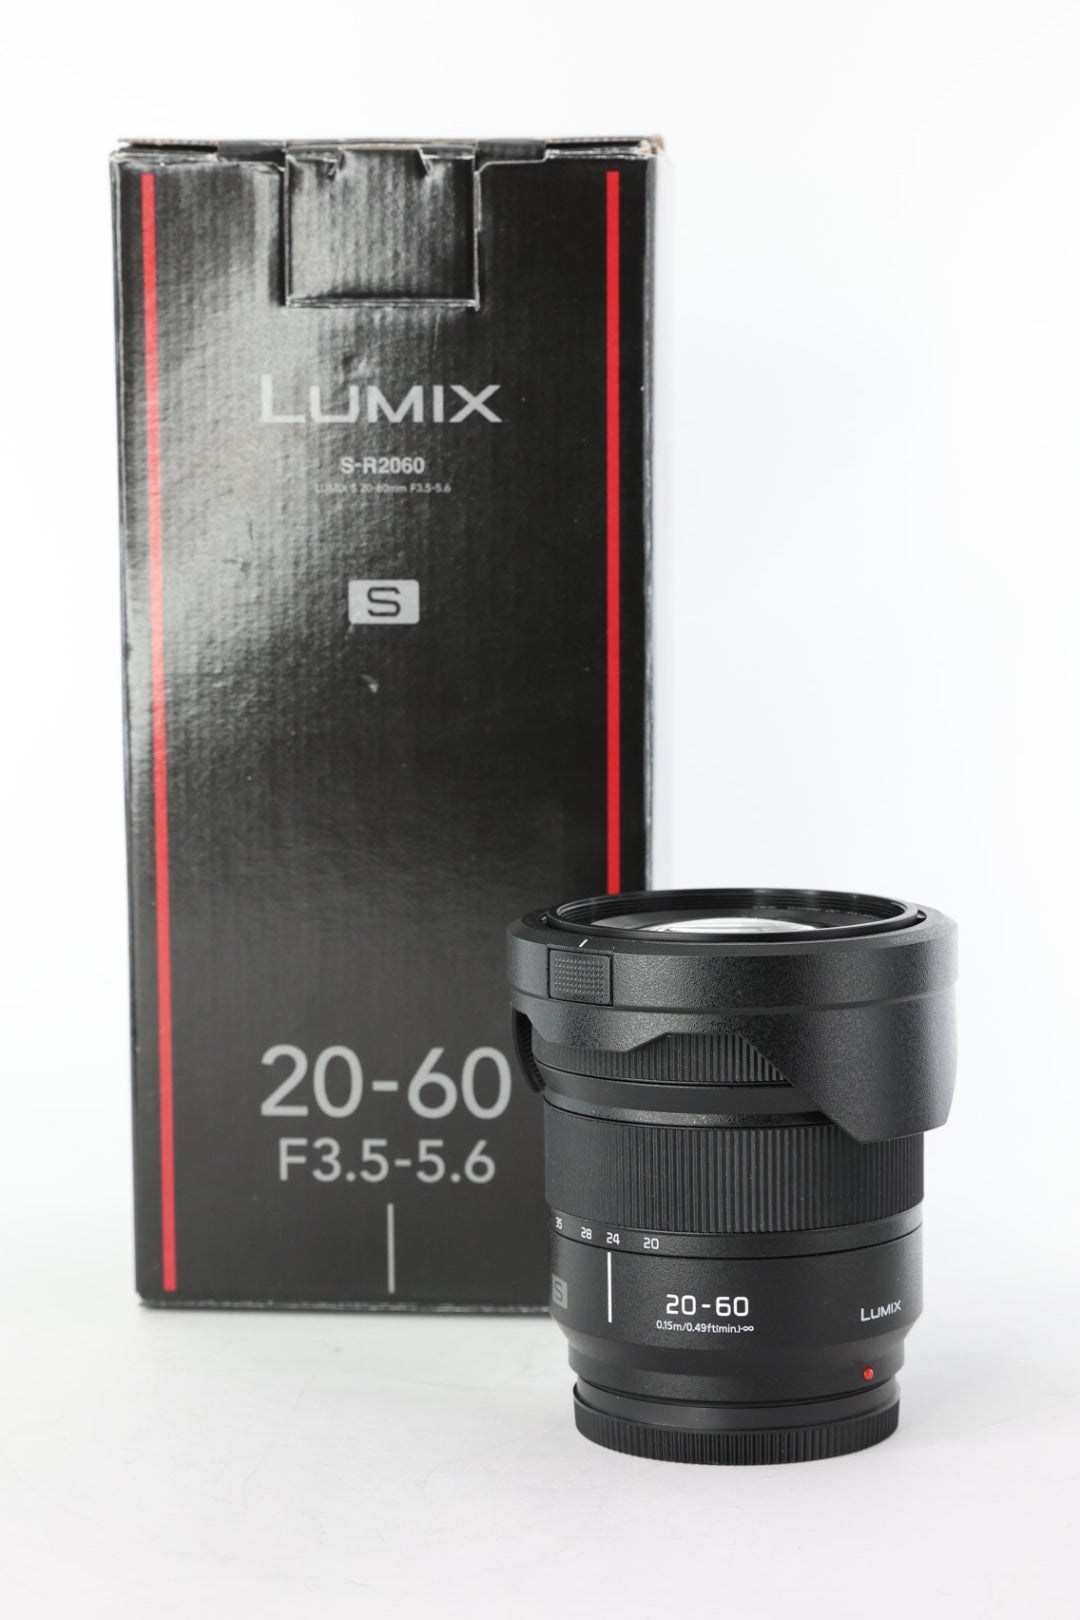 Panasonic S5/2060/02588 Lumix S5 + Lumix 20-60mm f/3.5-5.6, Used